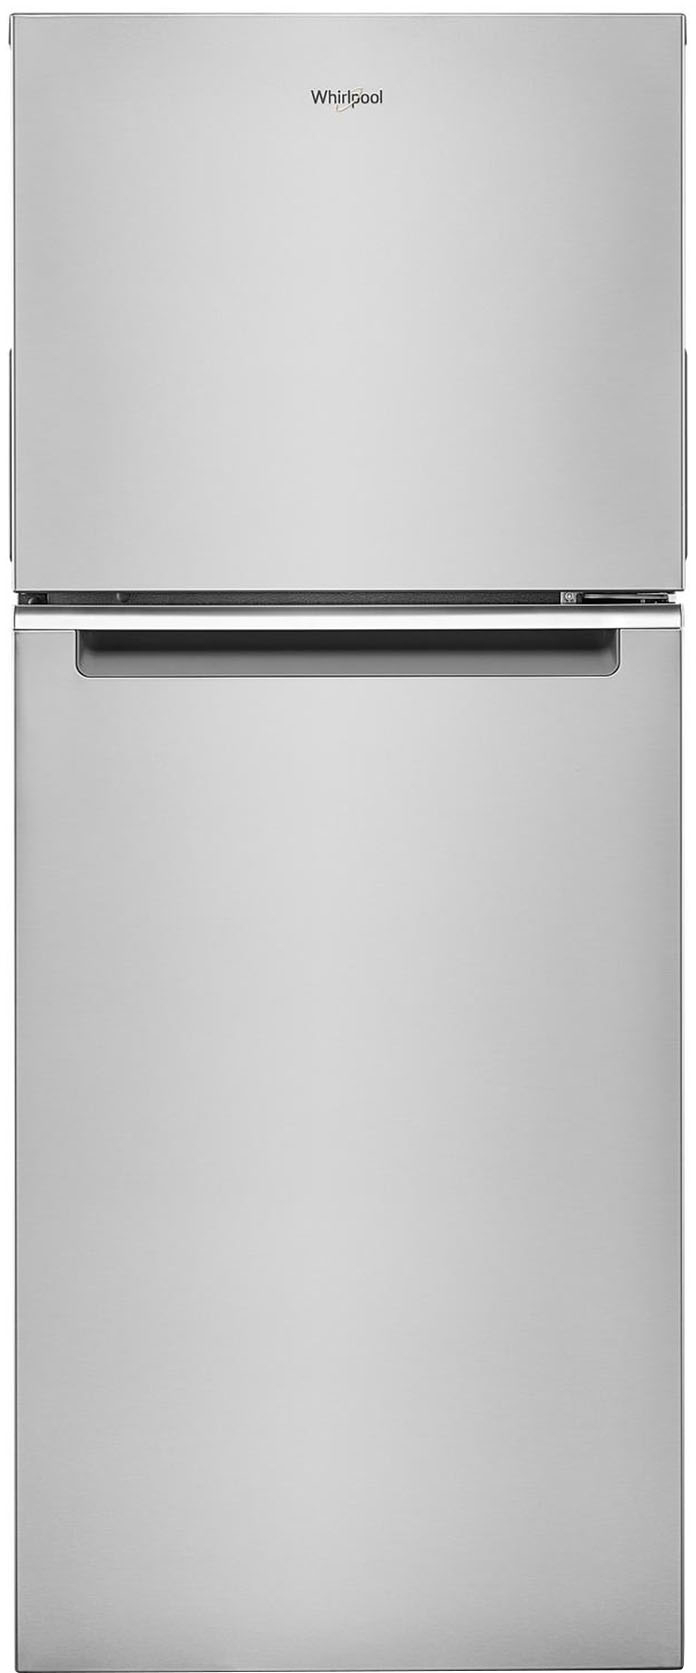 24 inch wide mini refrigerator hhgregg - Best Buy